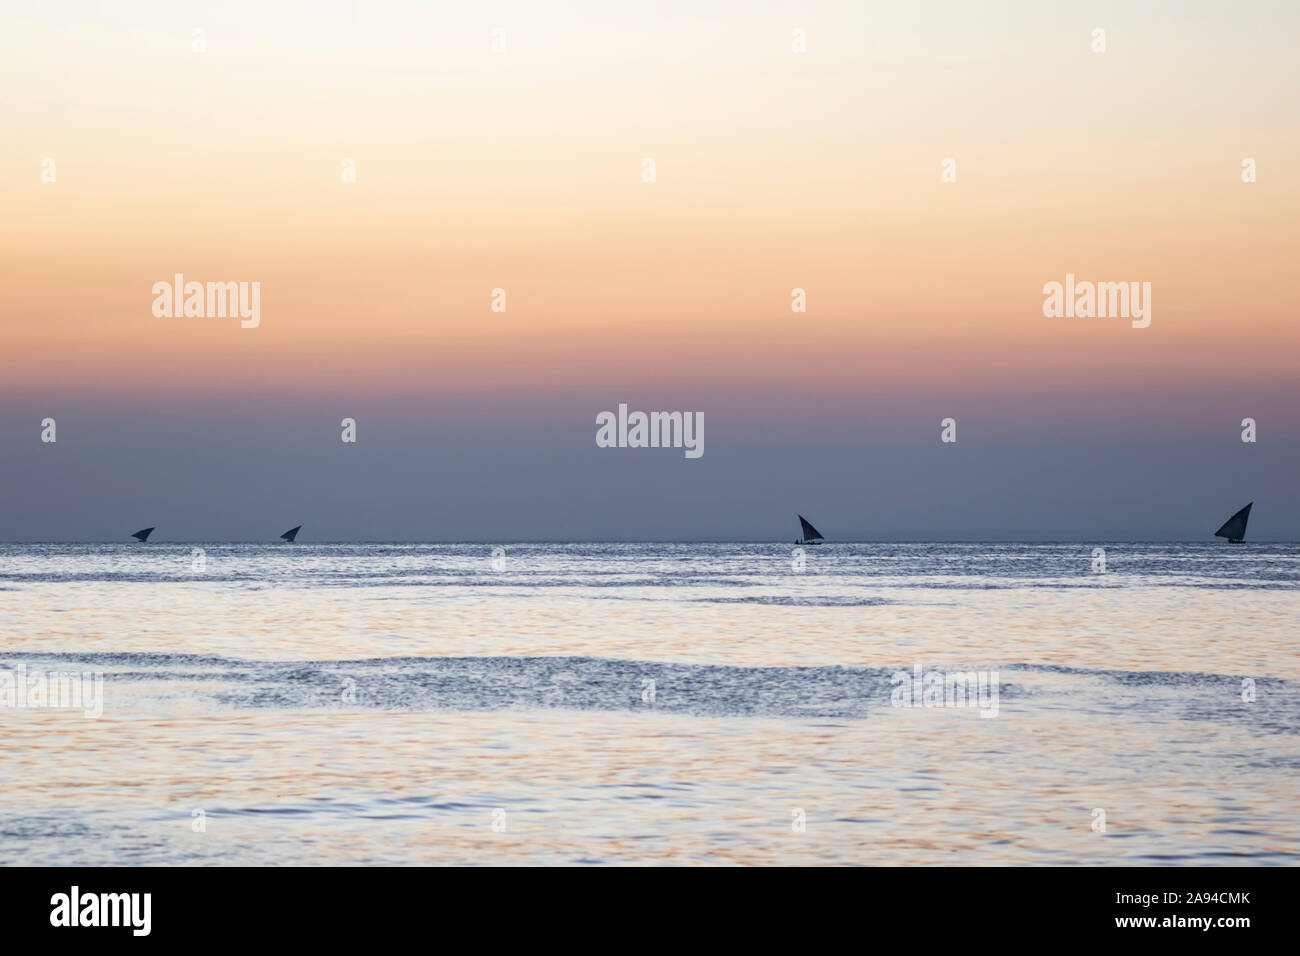 Dhows on the Indian Ocean at sunset, Stone Town of Zanzibar; Zanzibar City, Unguja Island, Zanzibar, Tanzania Stock Photo